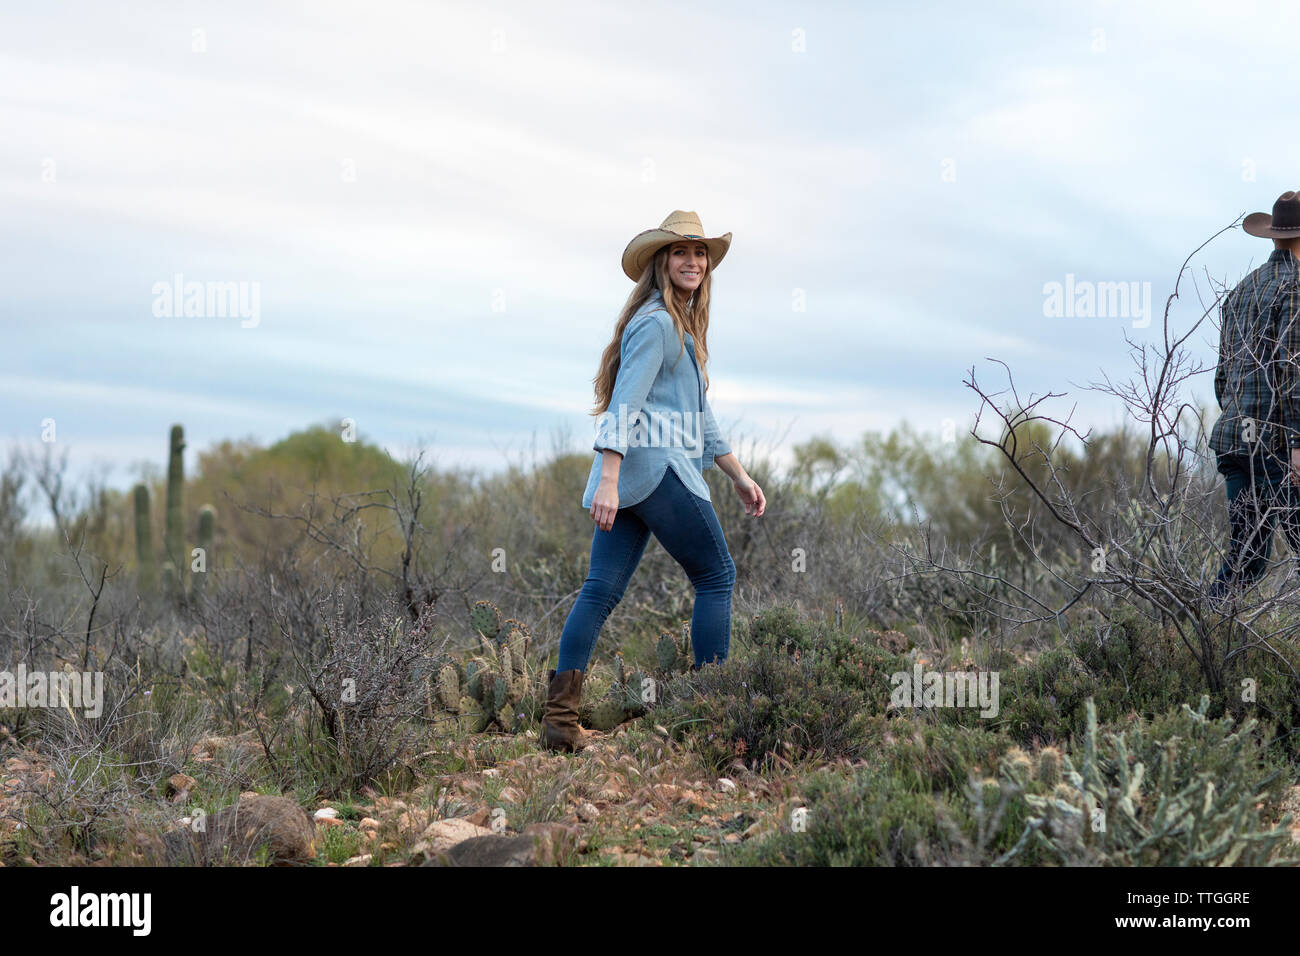 Western wear young woman walking in desert ranch Stock Photo